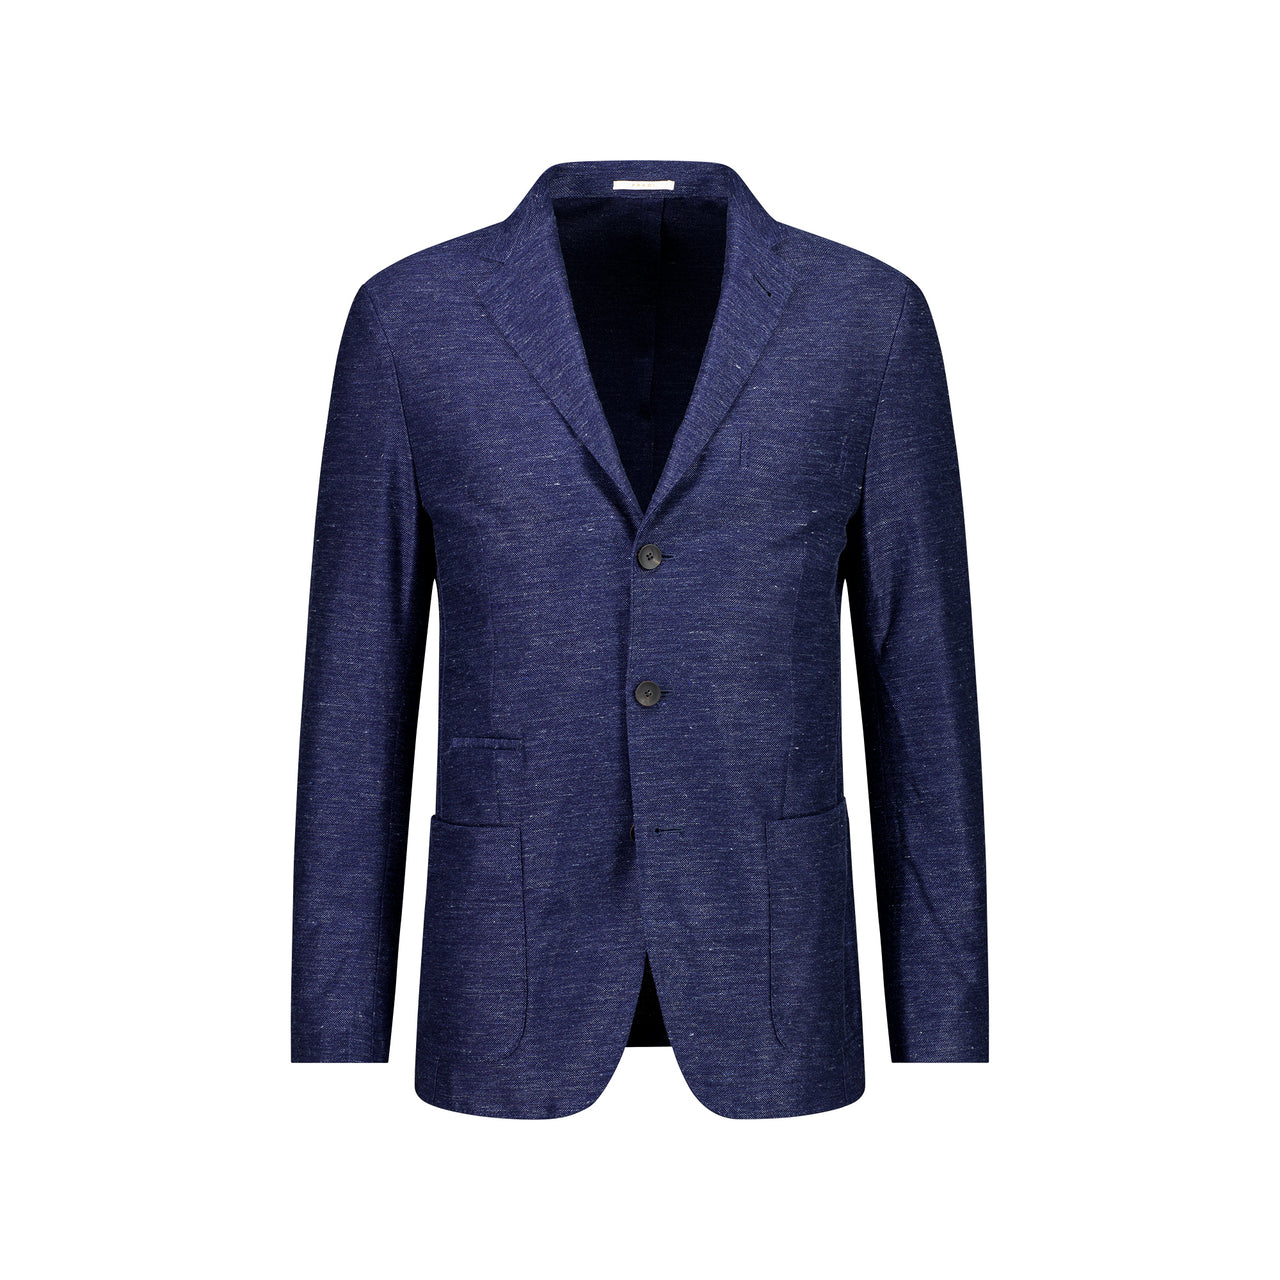 FRADI Cotton/Linen Sports Jacket NAVY